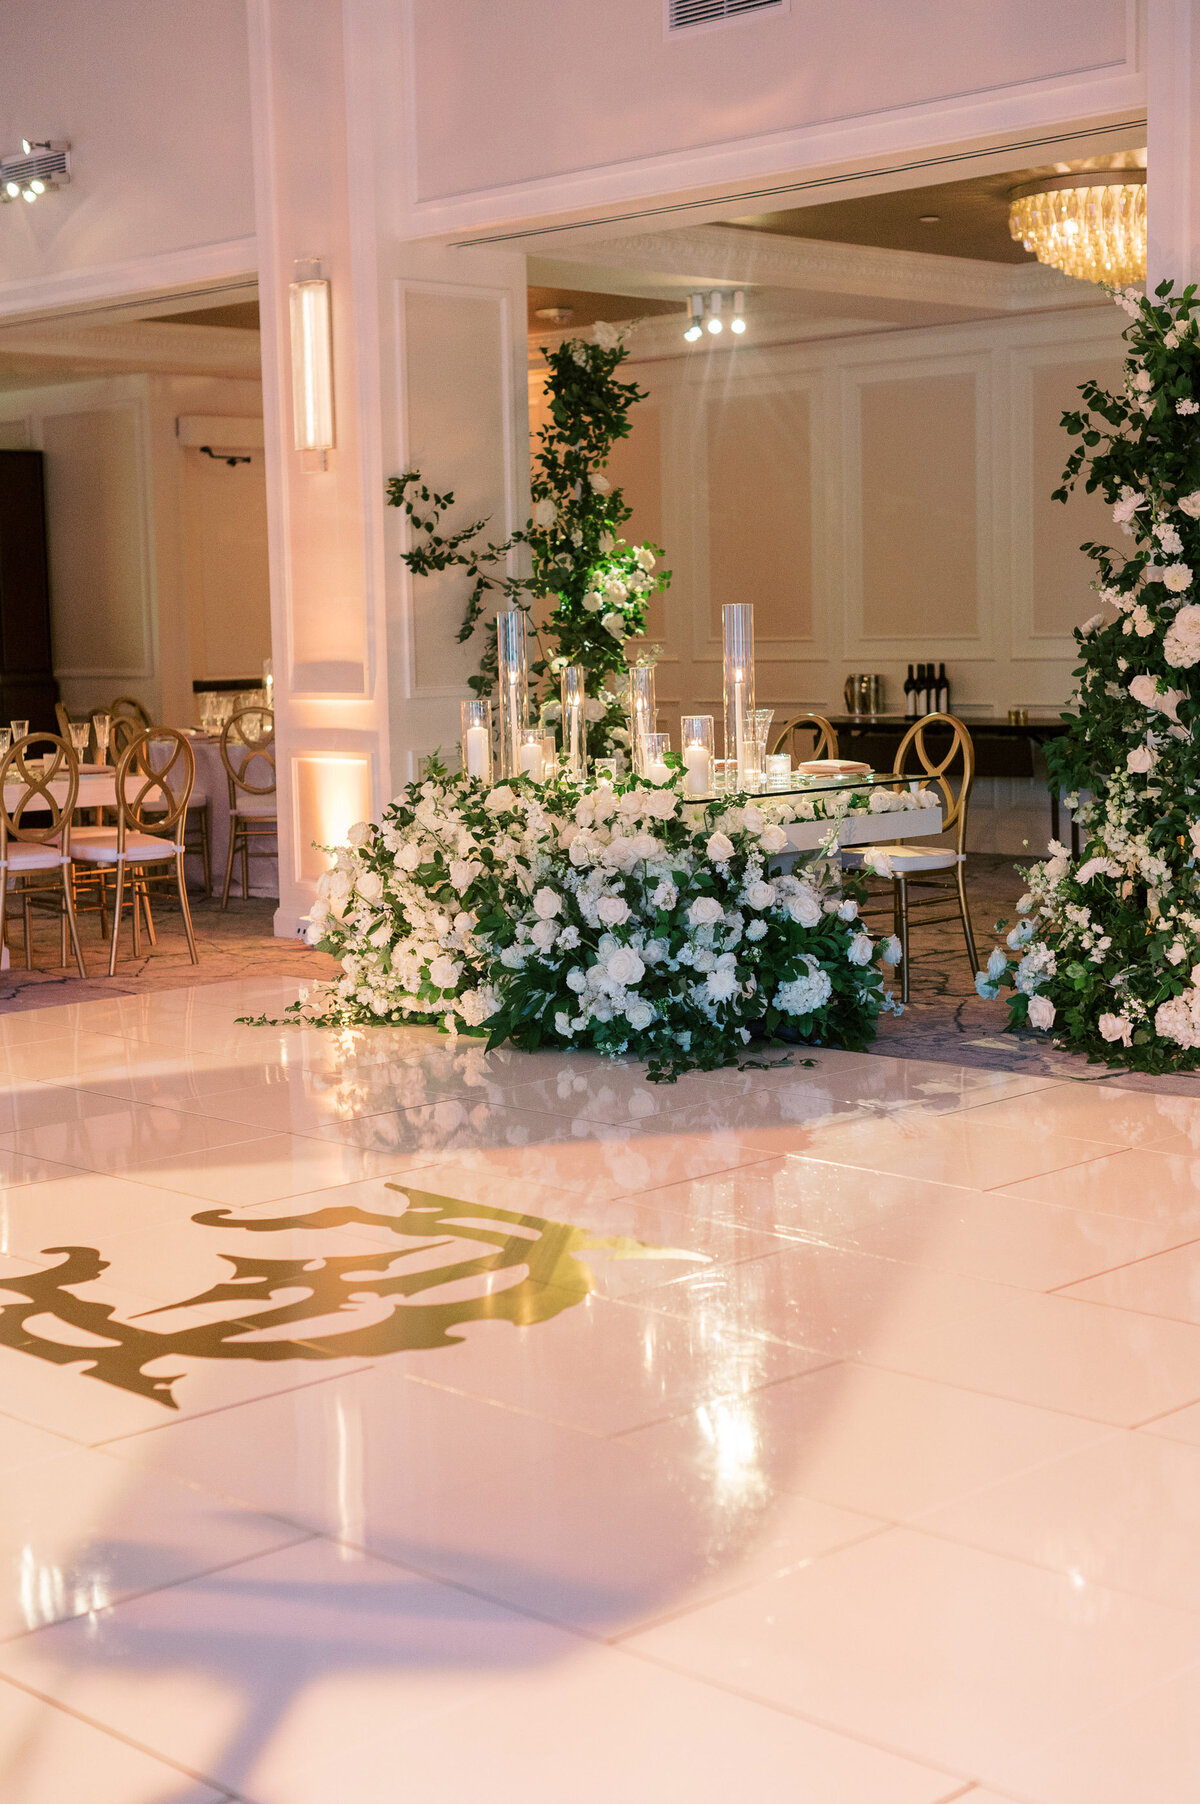 Kate-Murtaugh-Events-Boston-wedding-reception-Newbury-Hotel-floral-ballroom